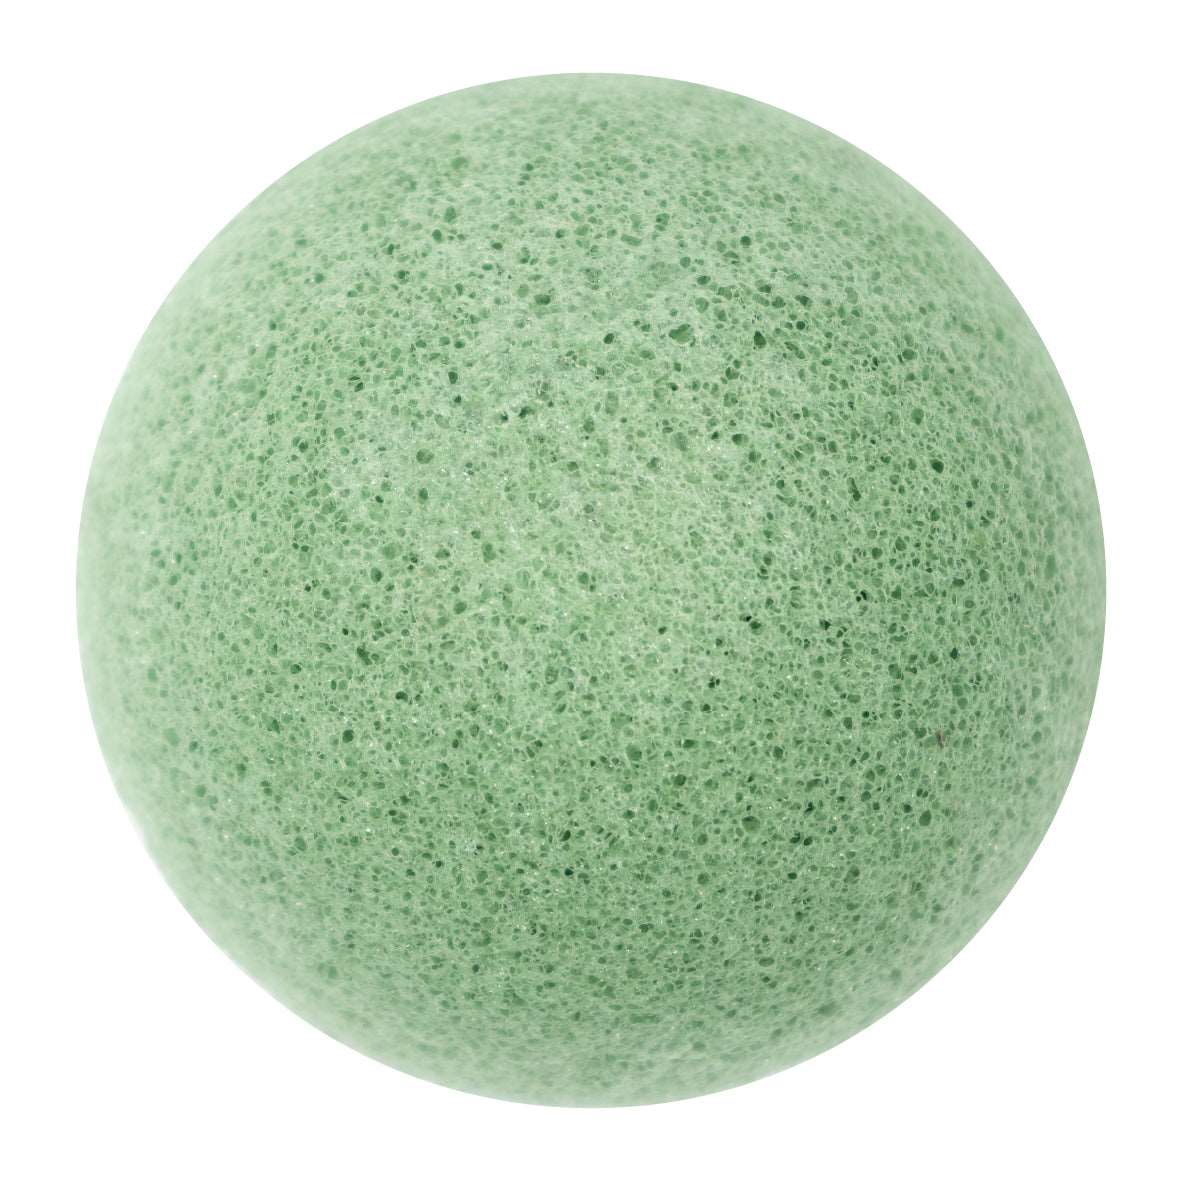 Green Konjac Facial Sponge - French Clay - Buddha Beauty Skincare Accessories #vegan# #cruelty-free# #skincare#